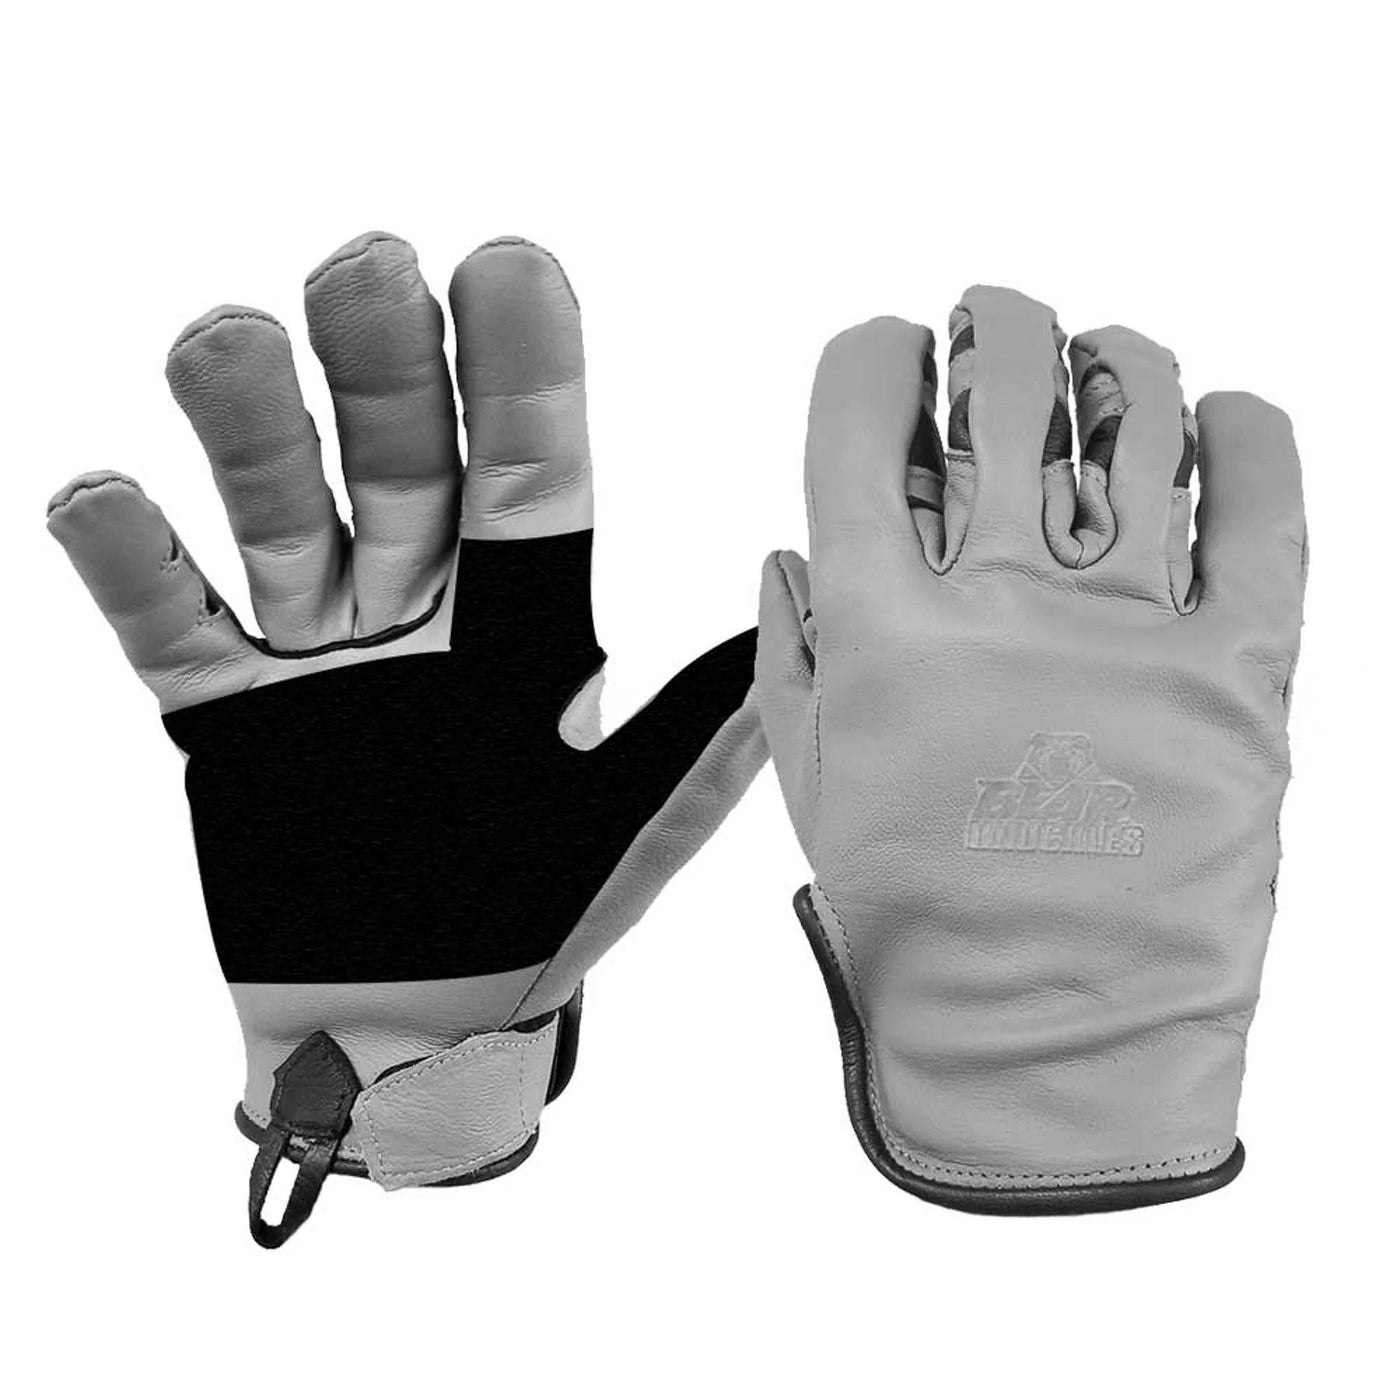 Bear Knuckles Mechanic Style Goat Hide Work Gloves-Men's Accessories-Kevin's Fine Outdoor Gear & Apparel